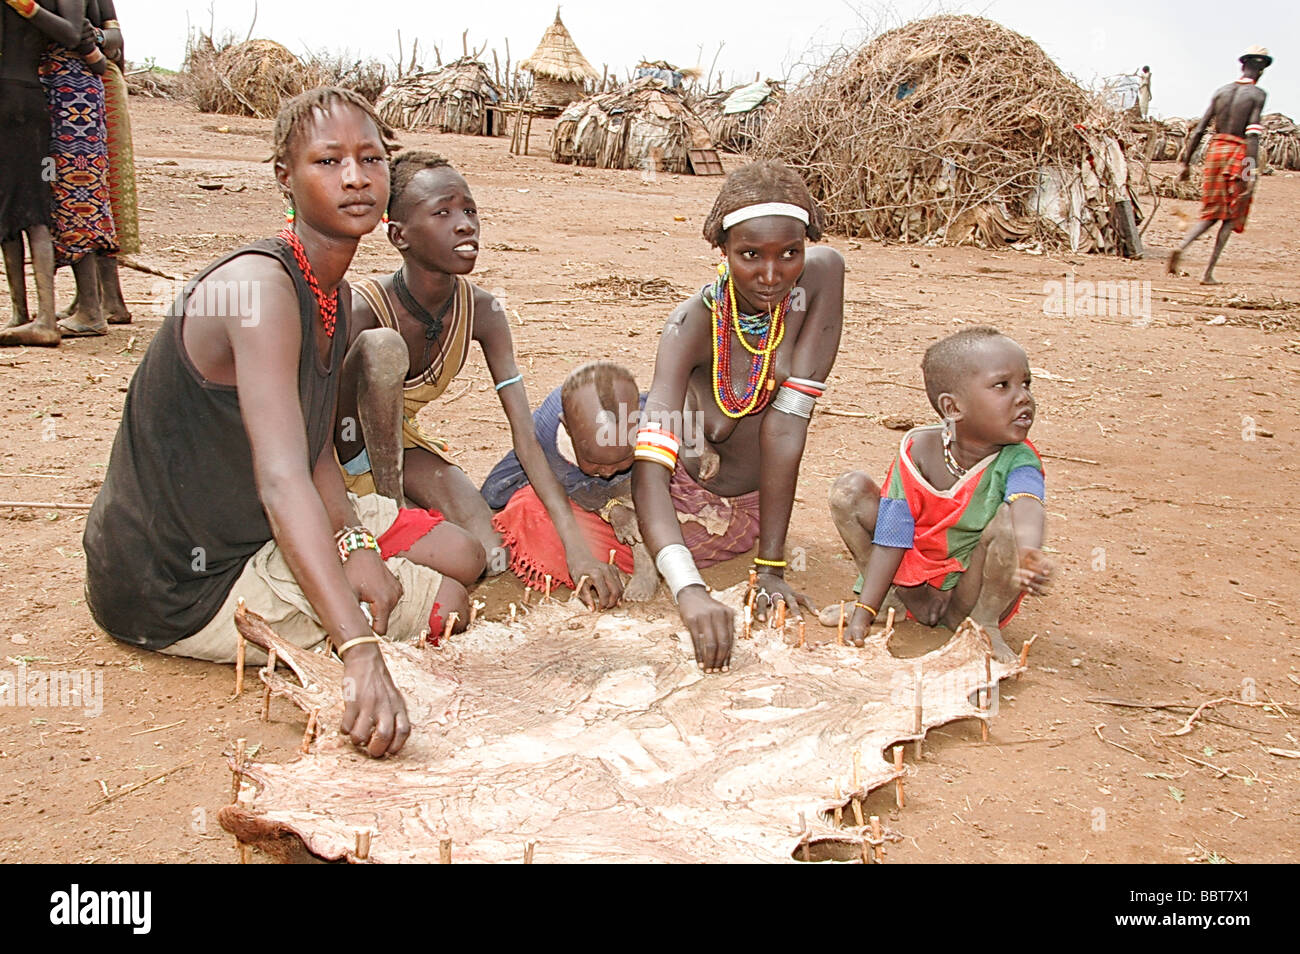 Africa Etiopia Valle dell'Omo indurimento Daasanach cuoio tribù Foto Stock